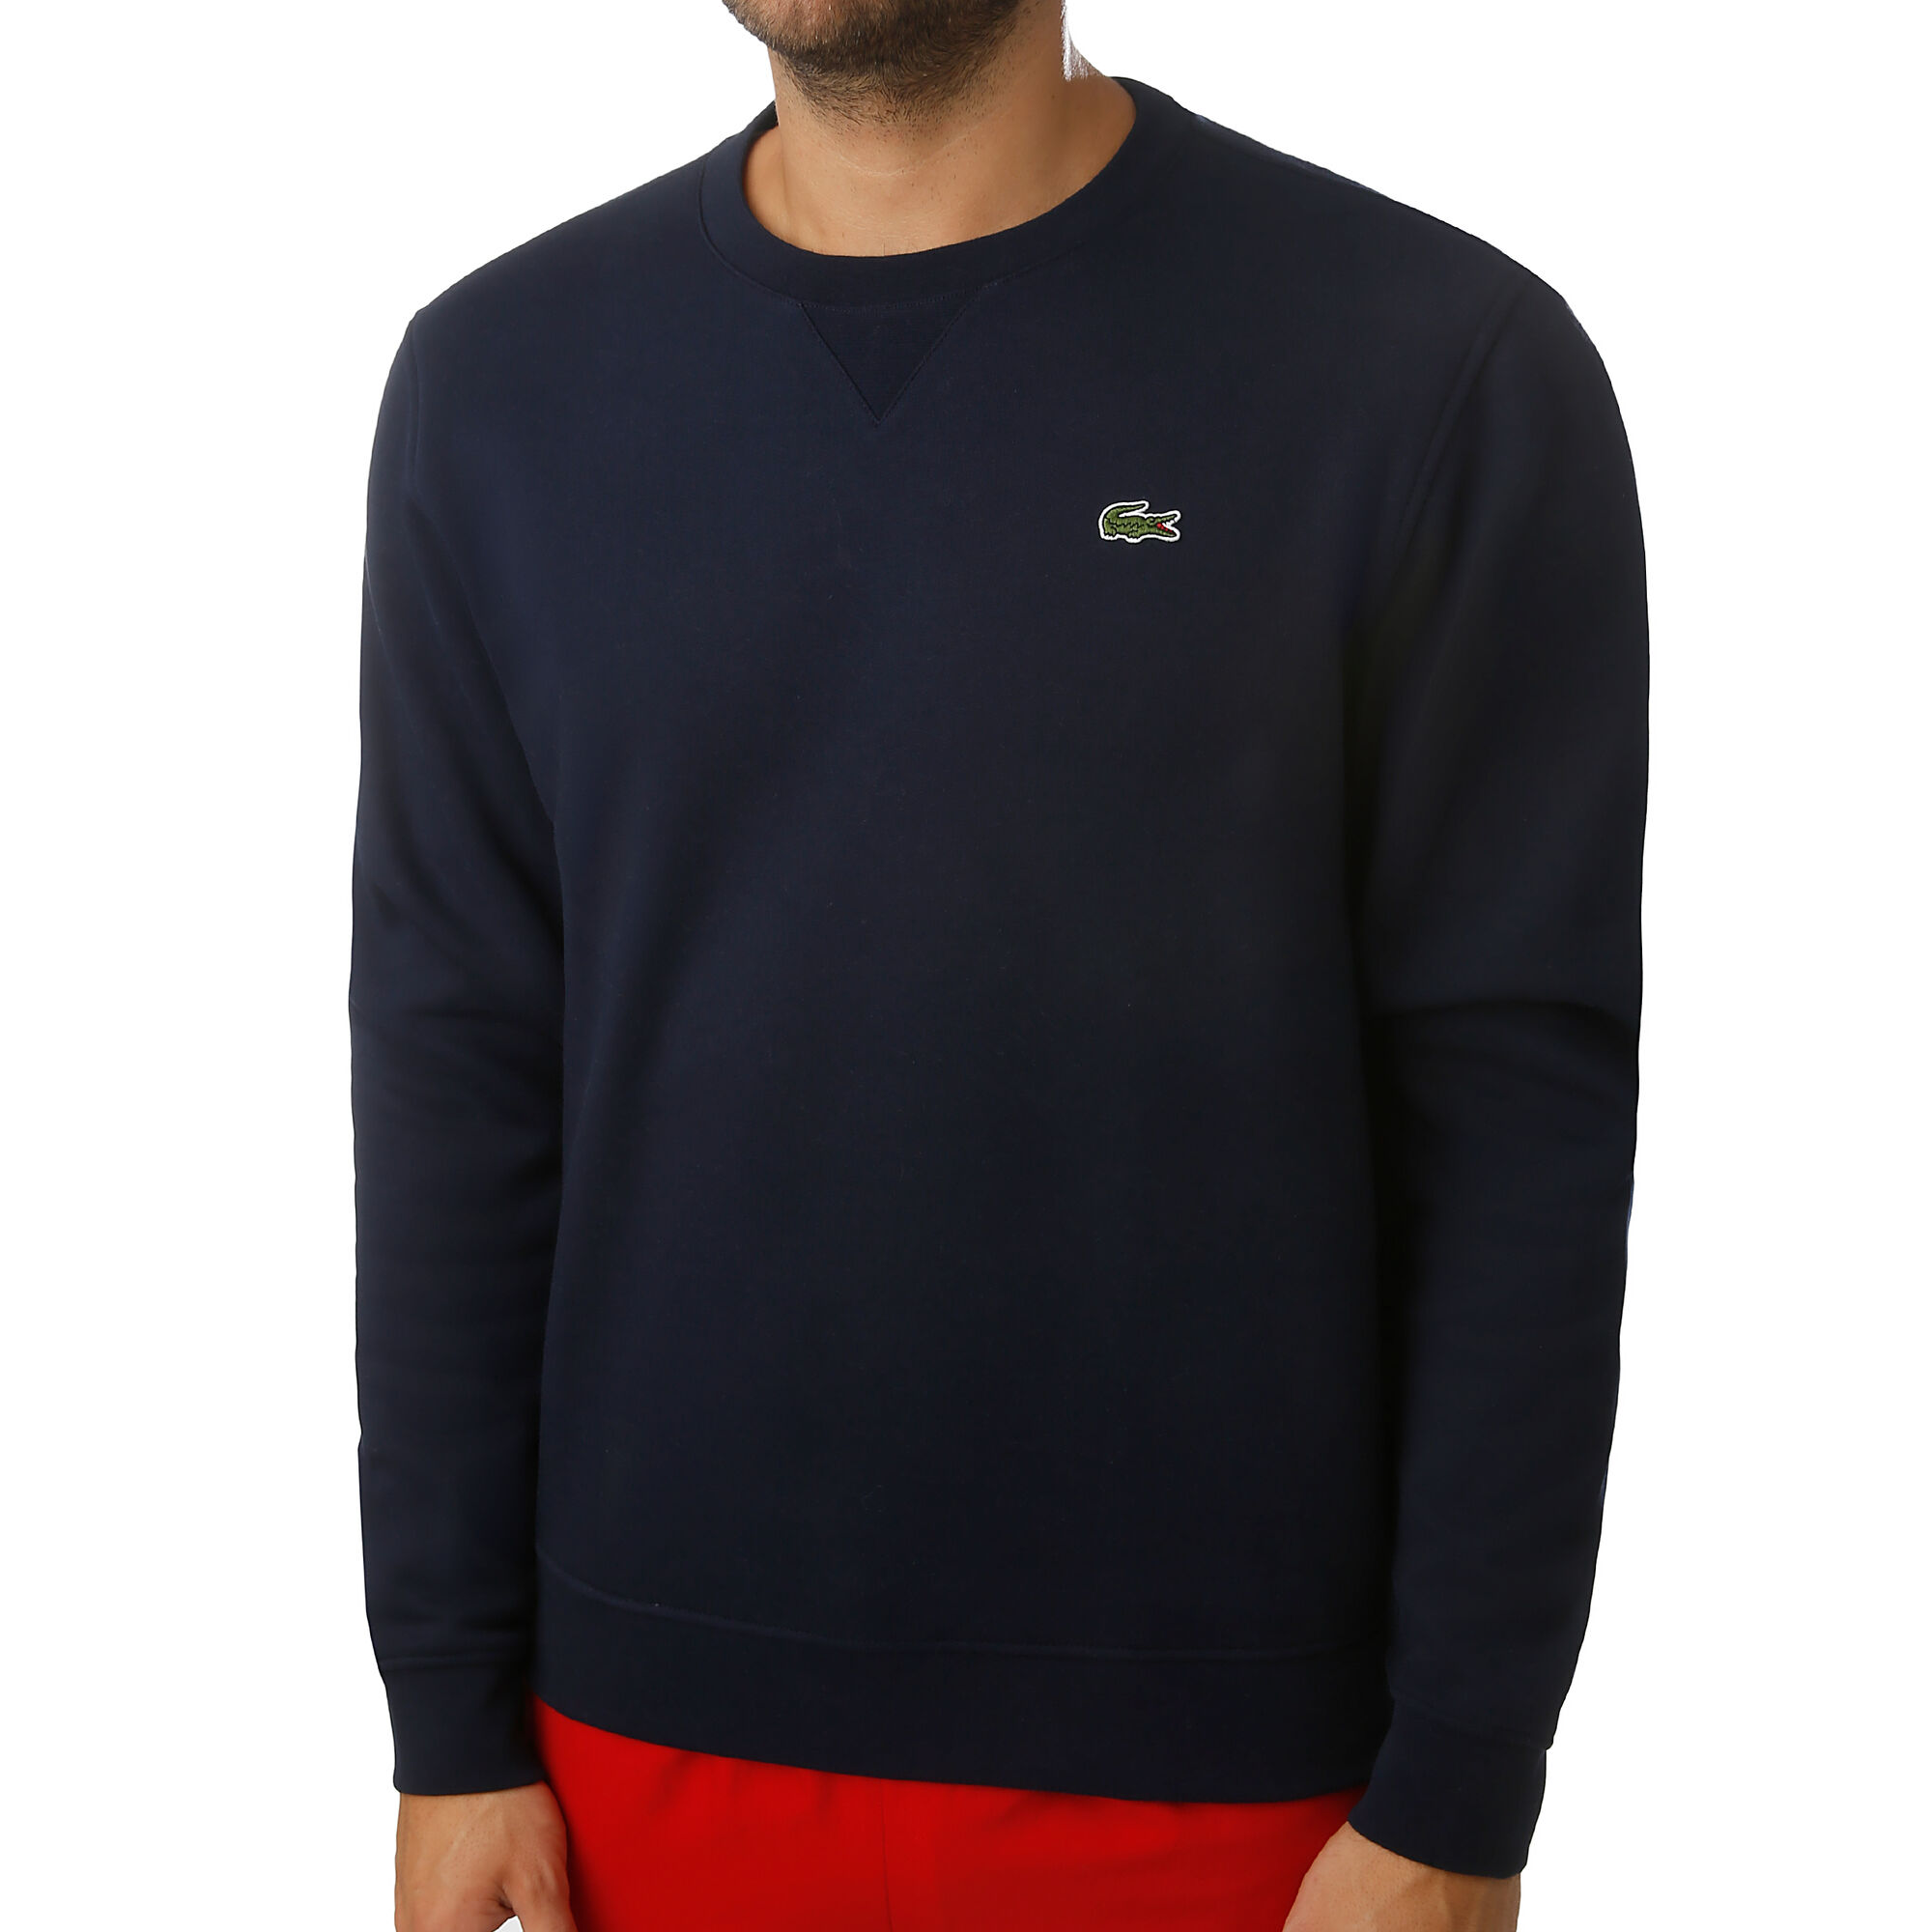 Buy Lacoste Sweatshirt Men Dark Blue, Green online | Tennis Point UK